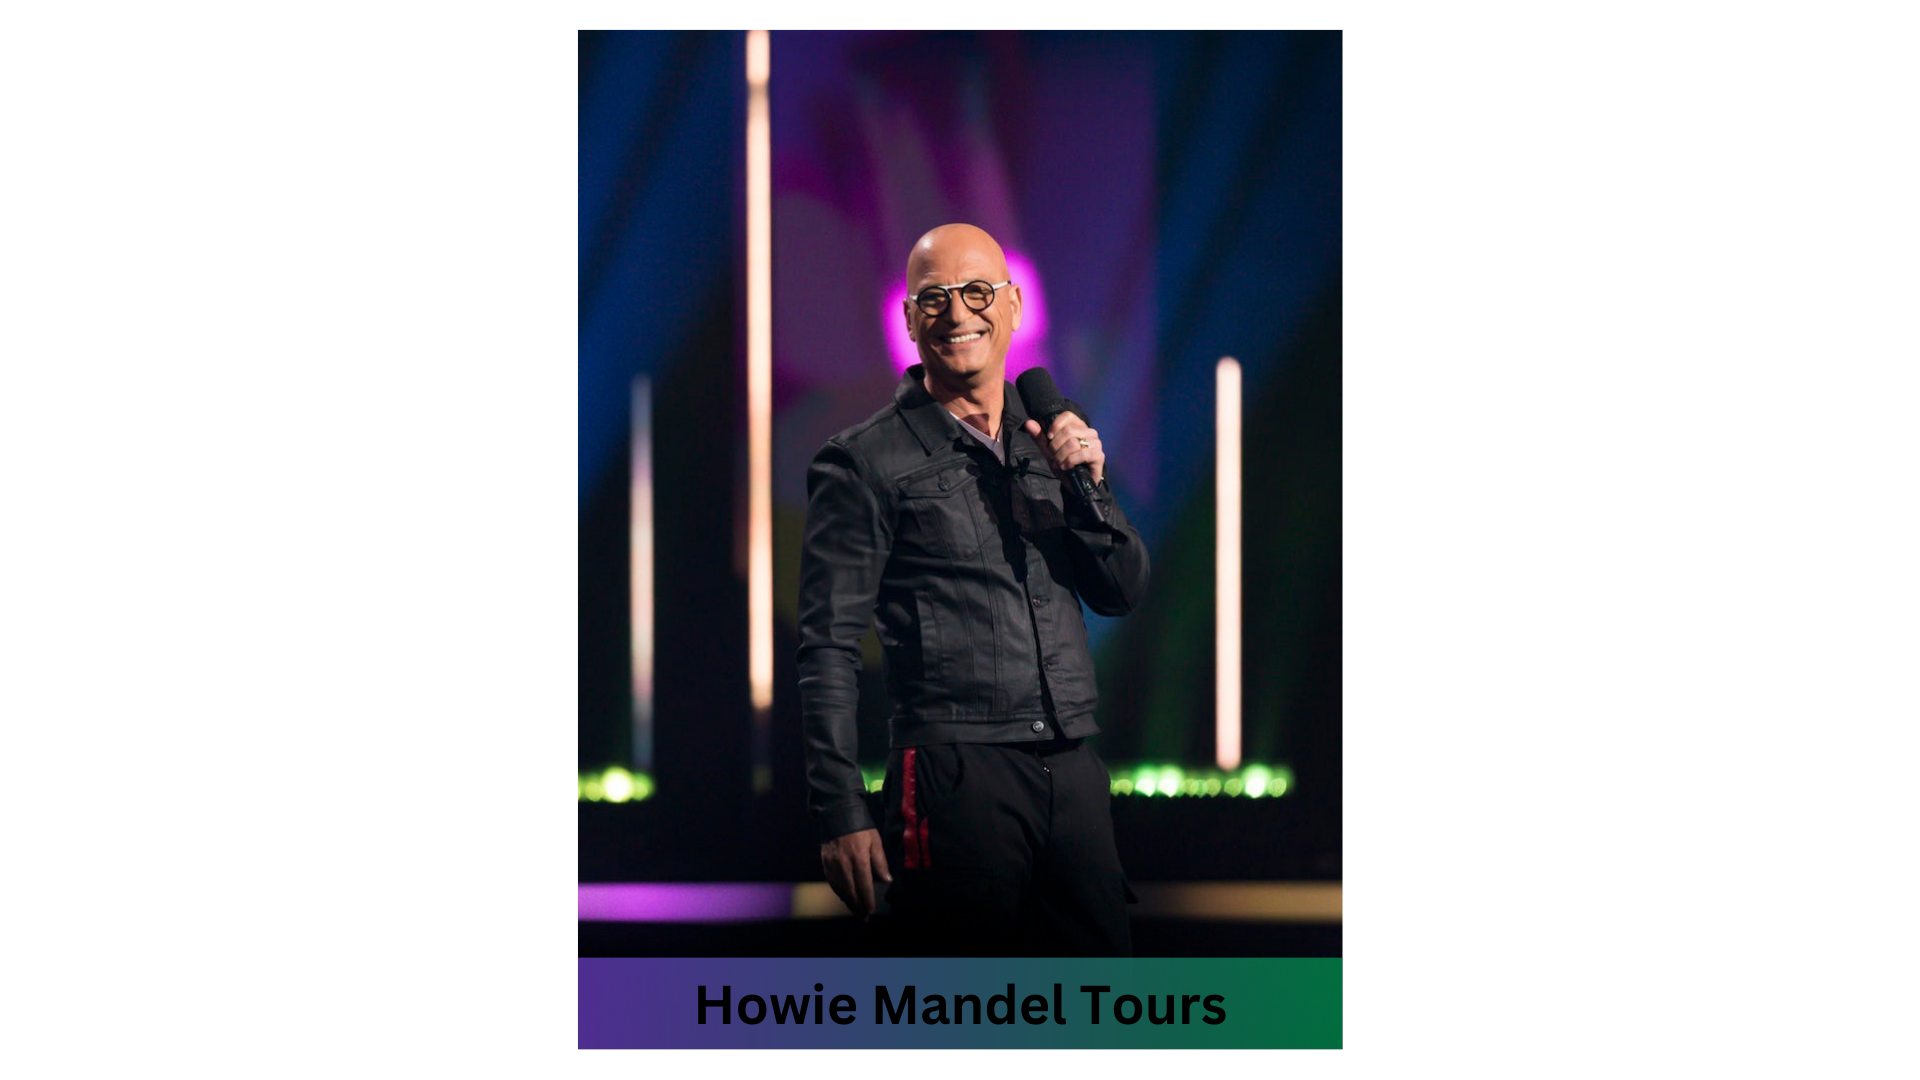 Howie Mandel Tours